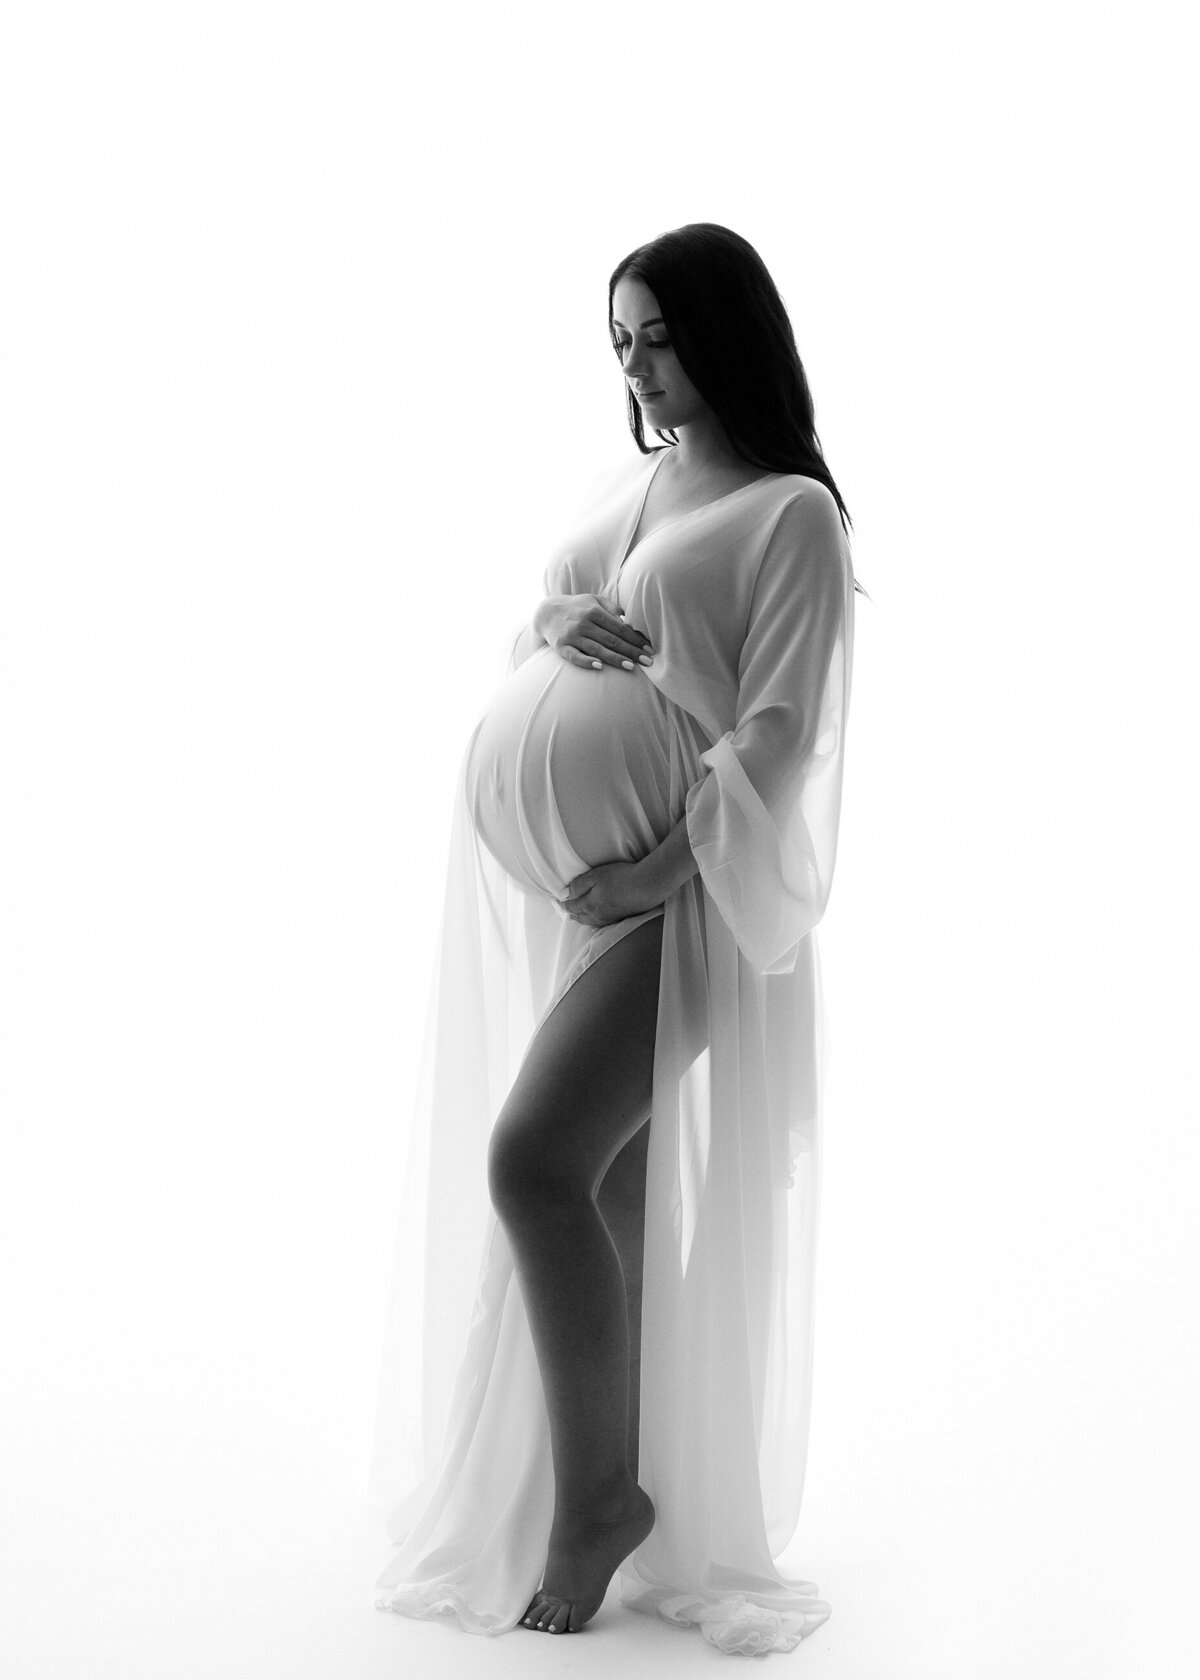 Misz Posh MUA - Repost- Yummy maternity session with this model